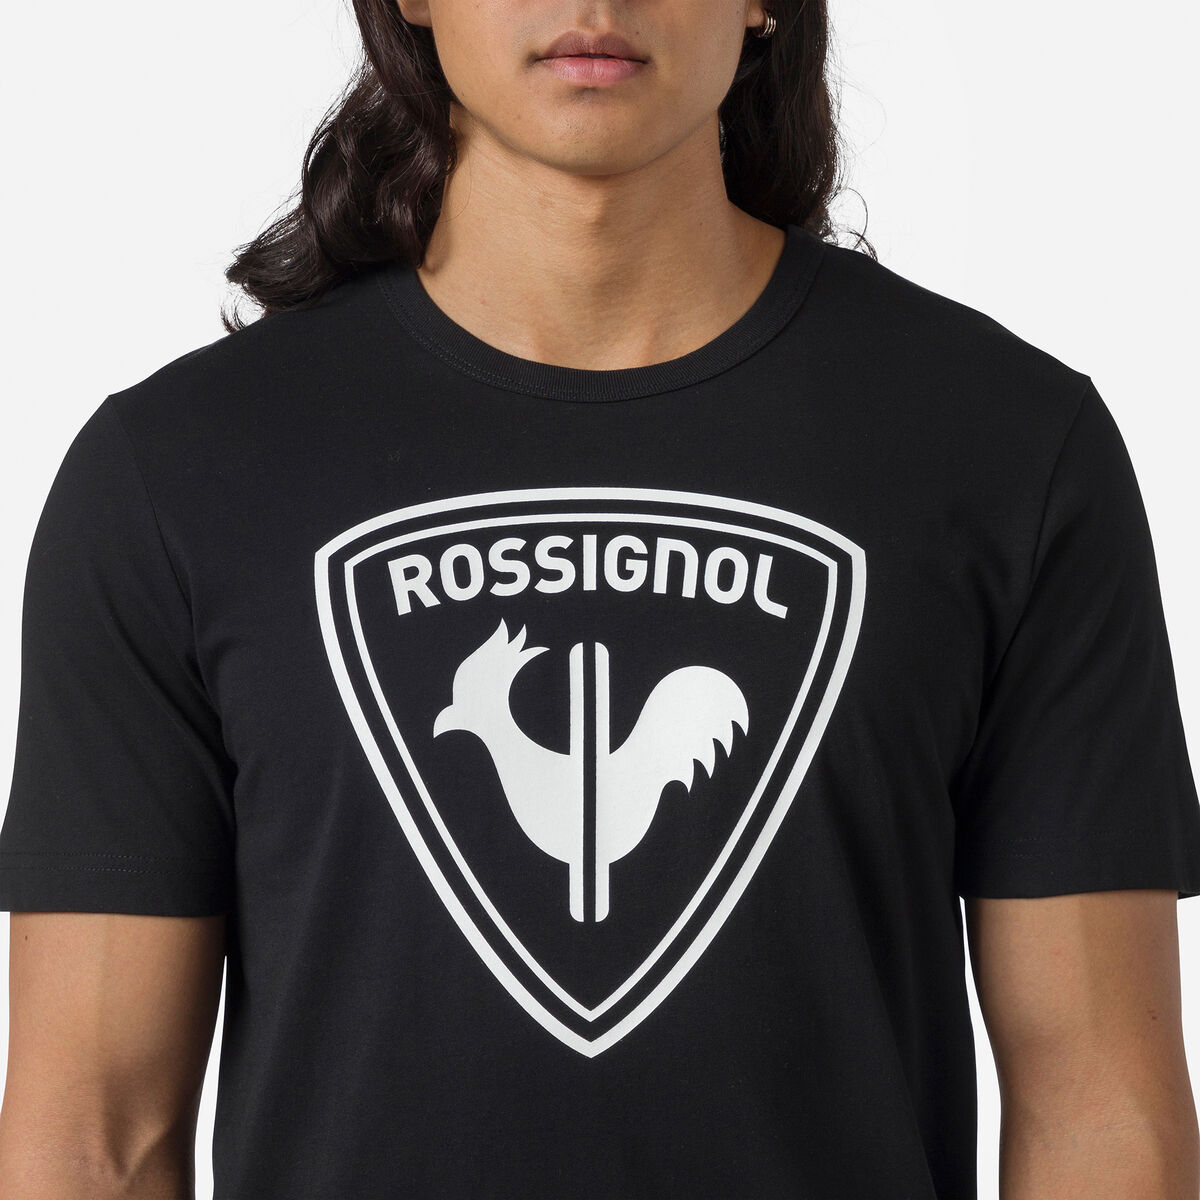 Rossignol Men's logo tee black